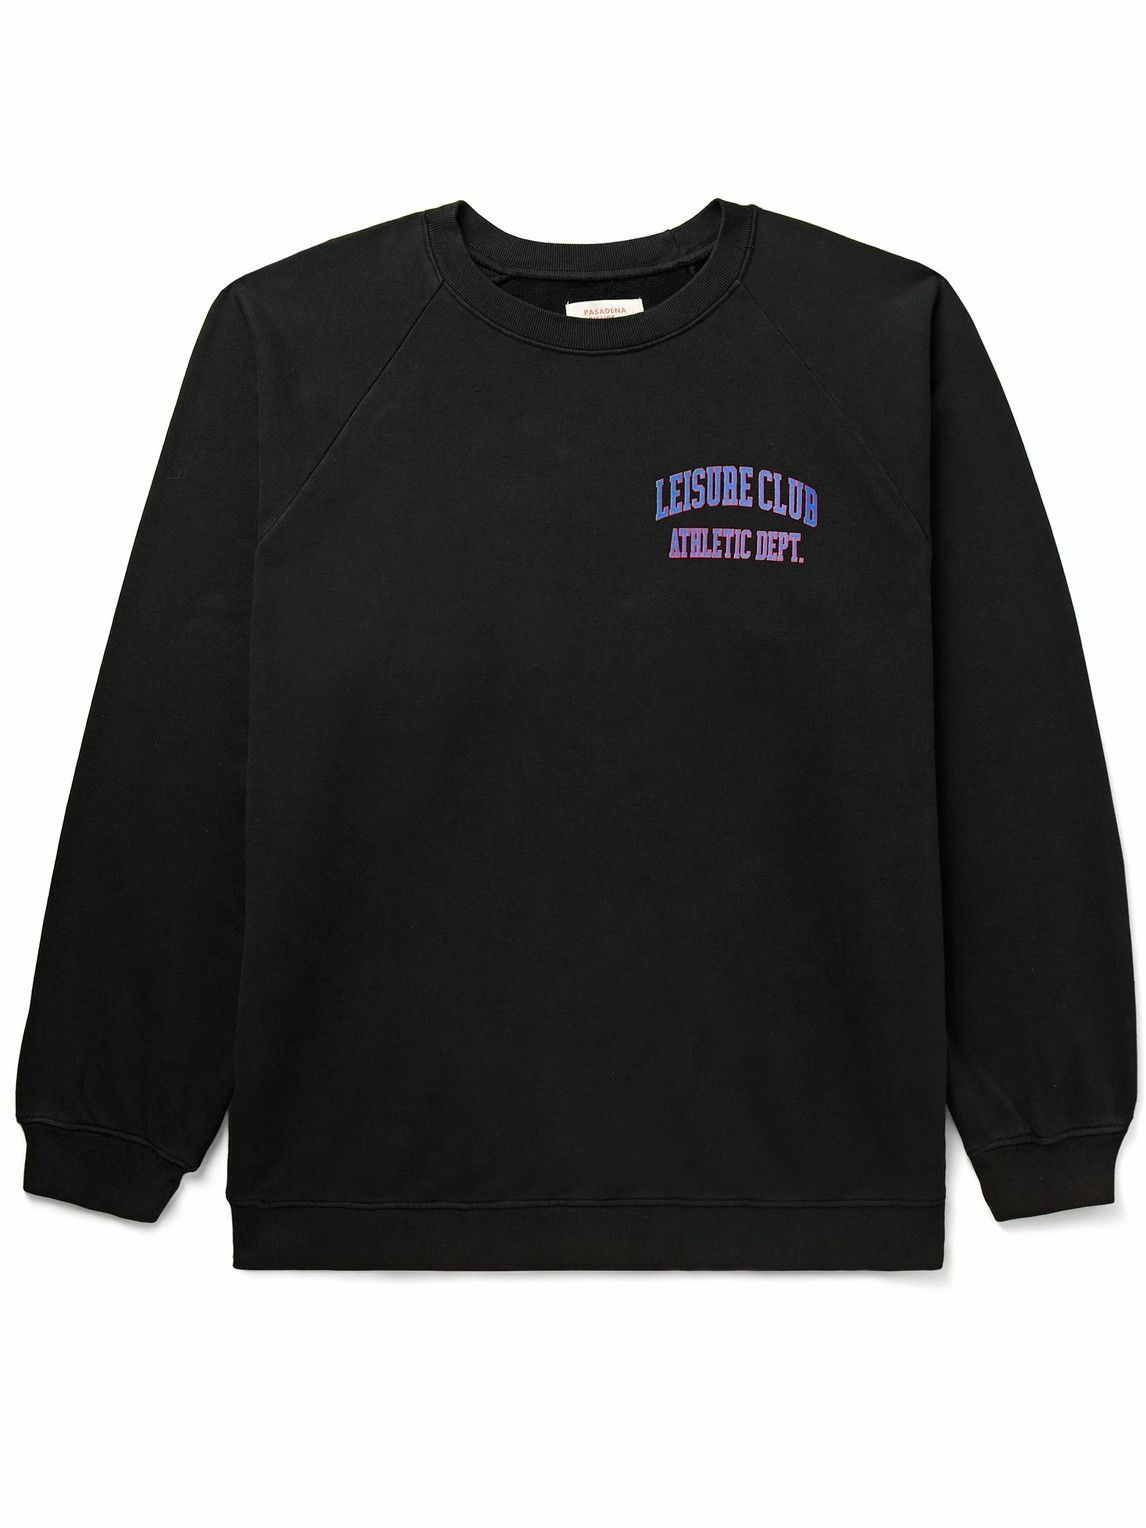 Photo: Pasadena Leisure Club - Athletic Dept. Logo-Print Cotton-Jersey Sweatshirt - Black